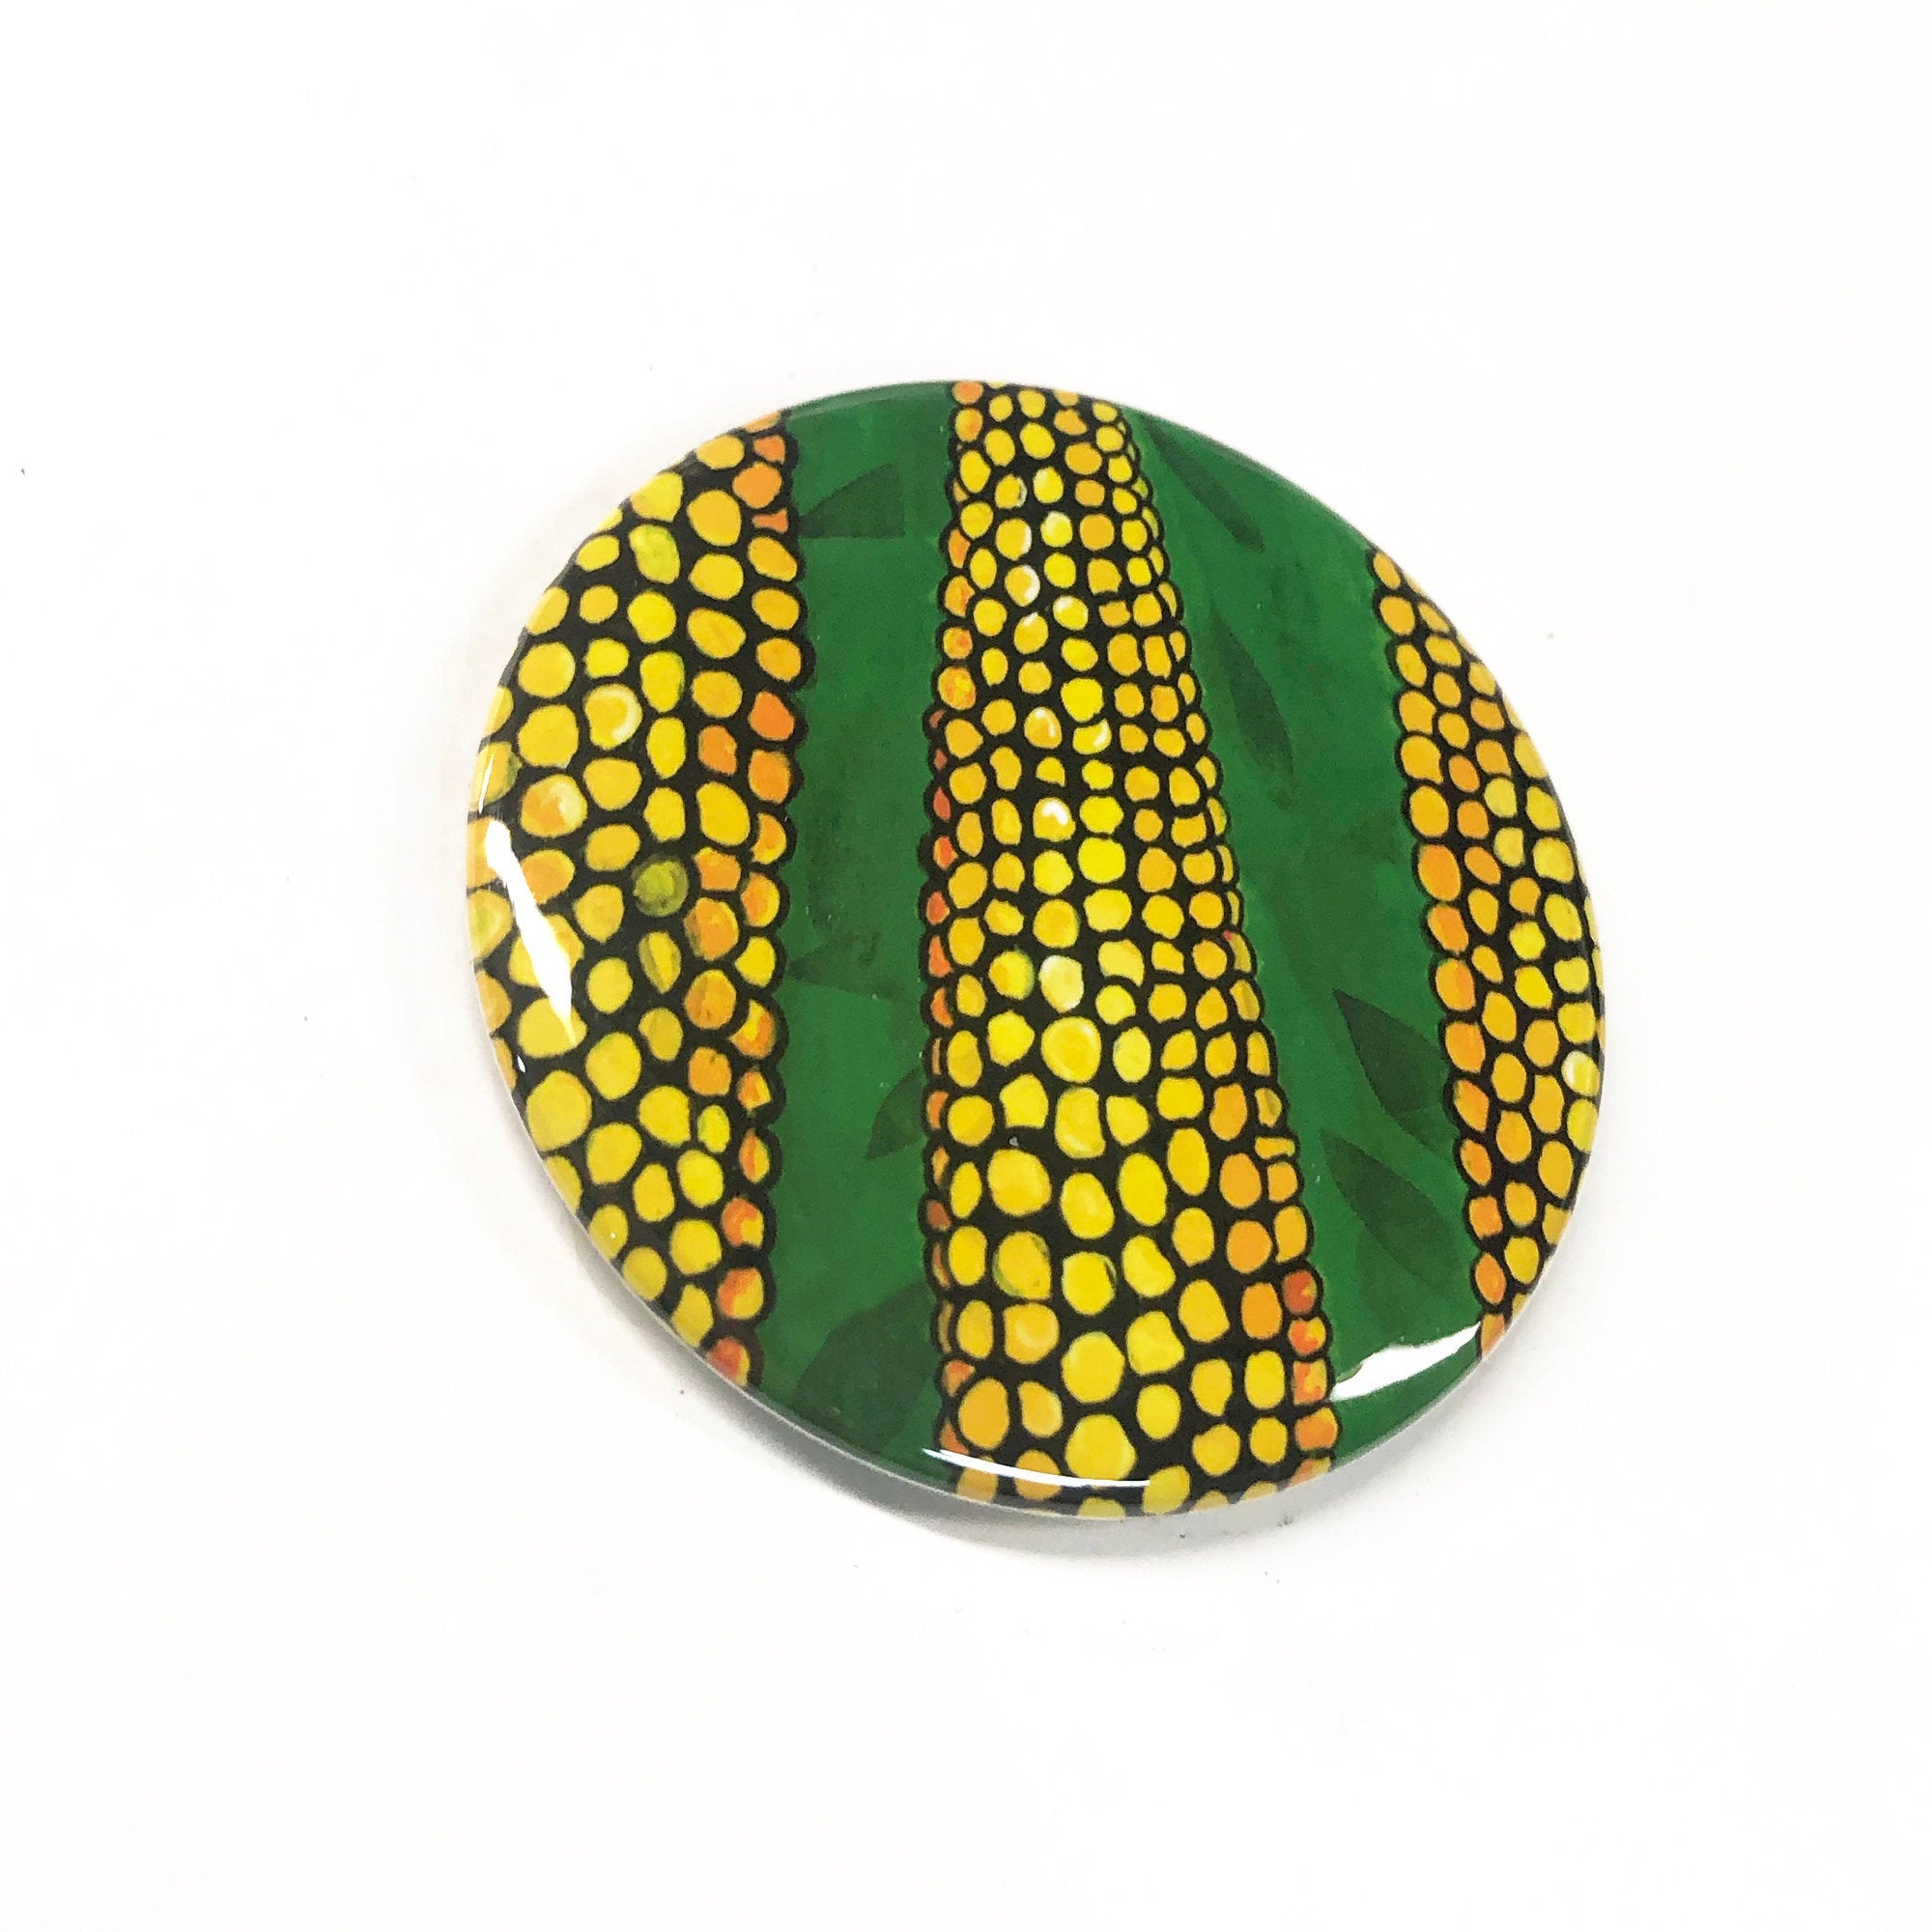 Corn Magnet, Pin Back Button, or Pocket Mirror - Corn on the Cob Fridge Magnet, Vegetable Magnet, Food Pin, or Fun Purse Mirror